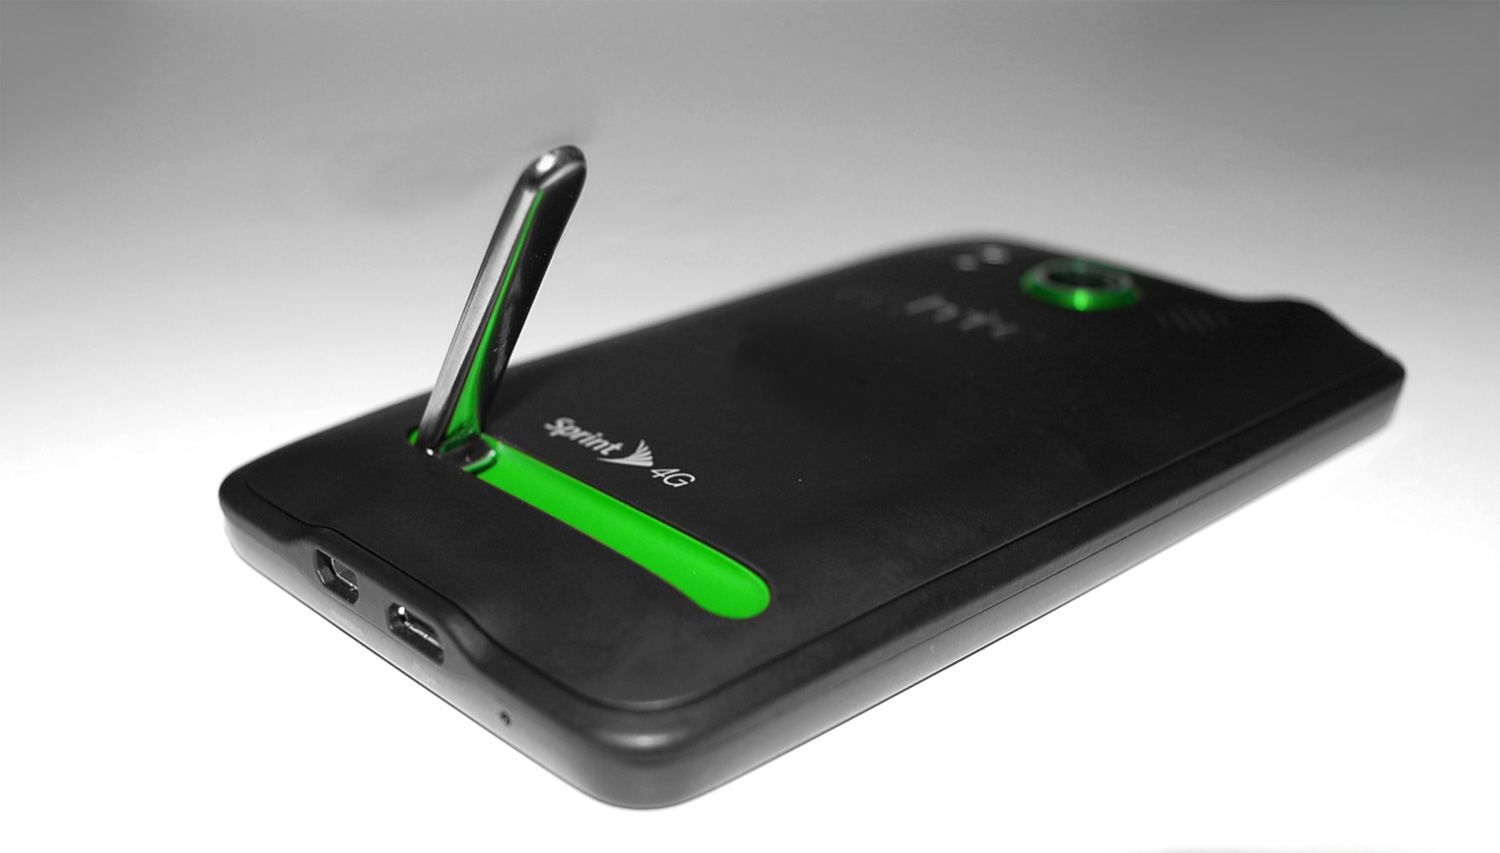 Adriancobra Handphone Accessories Blog Shop: HTC cases and accessories